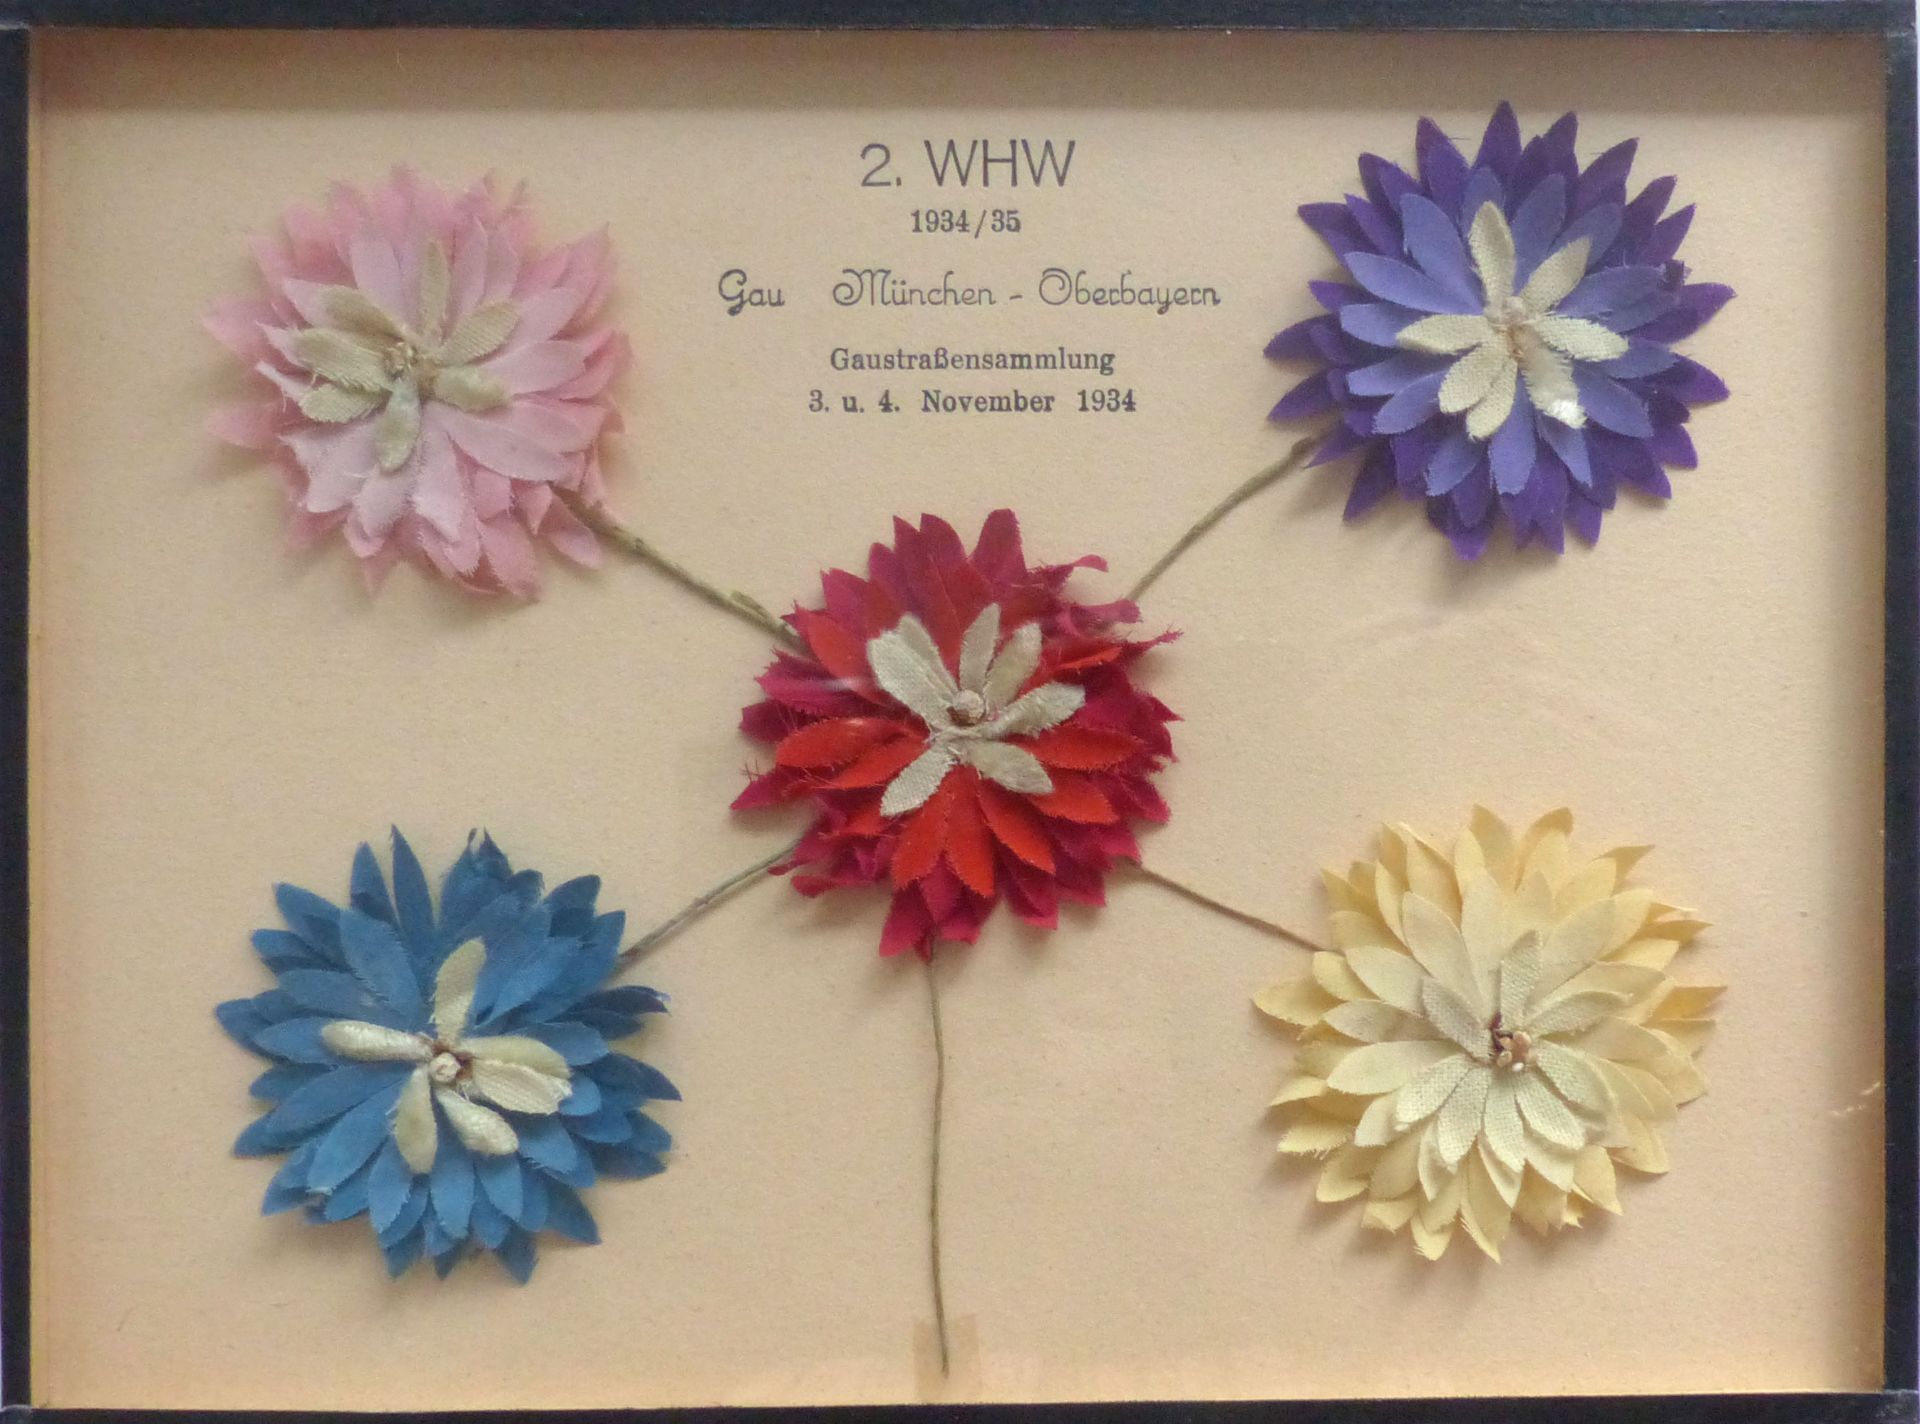 WHW Gau München-Oberbayern Gaustraßensammlung Nov. 1934 5 Blumen im Rahmen 17,5 x 24 cm I-II